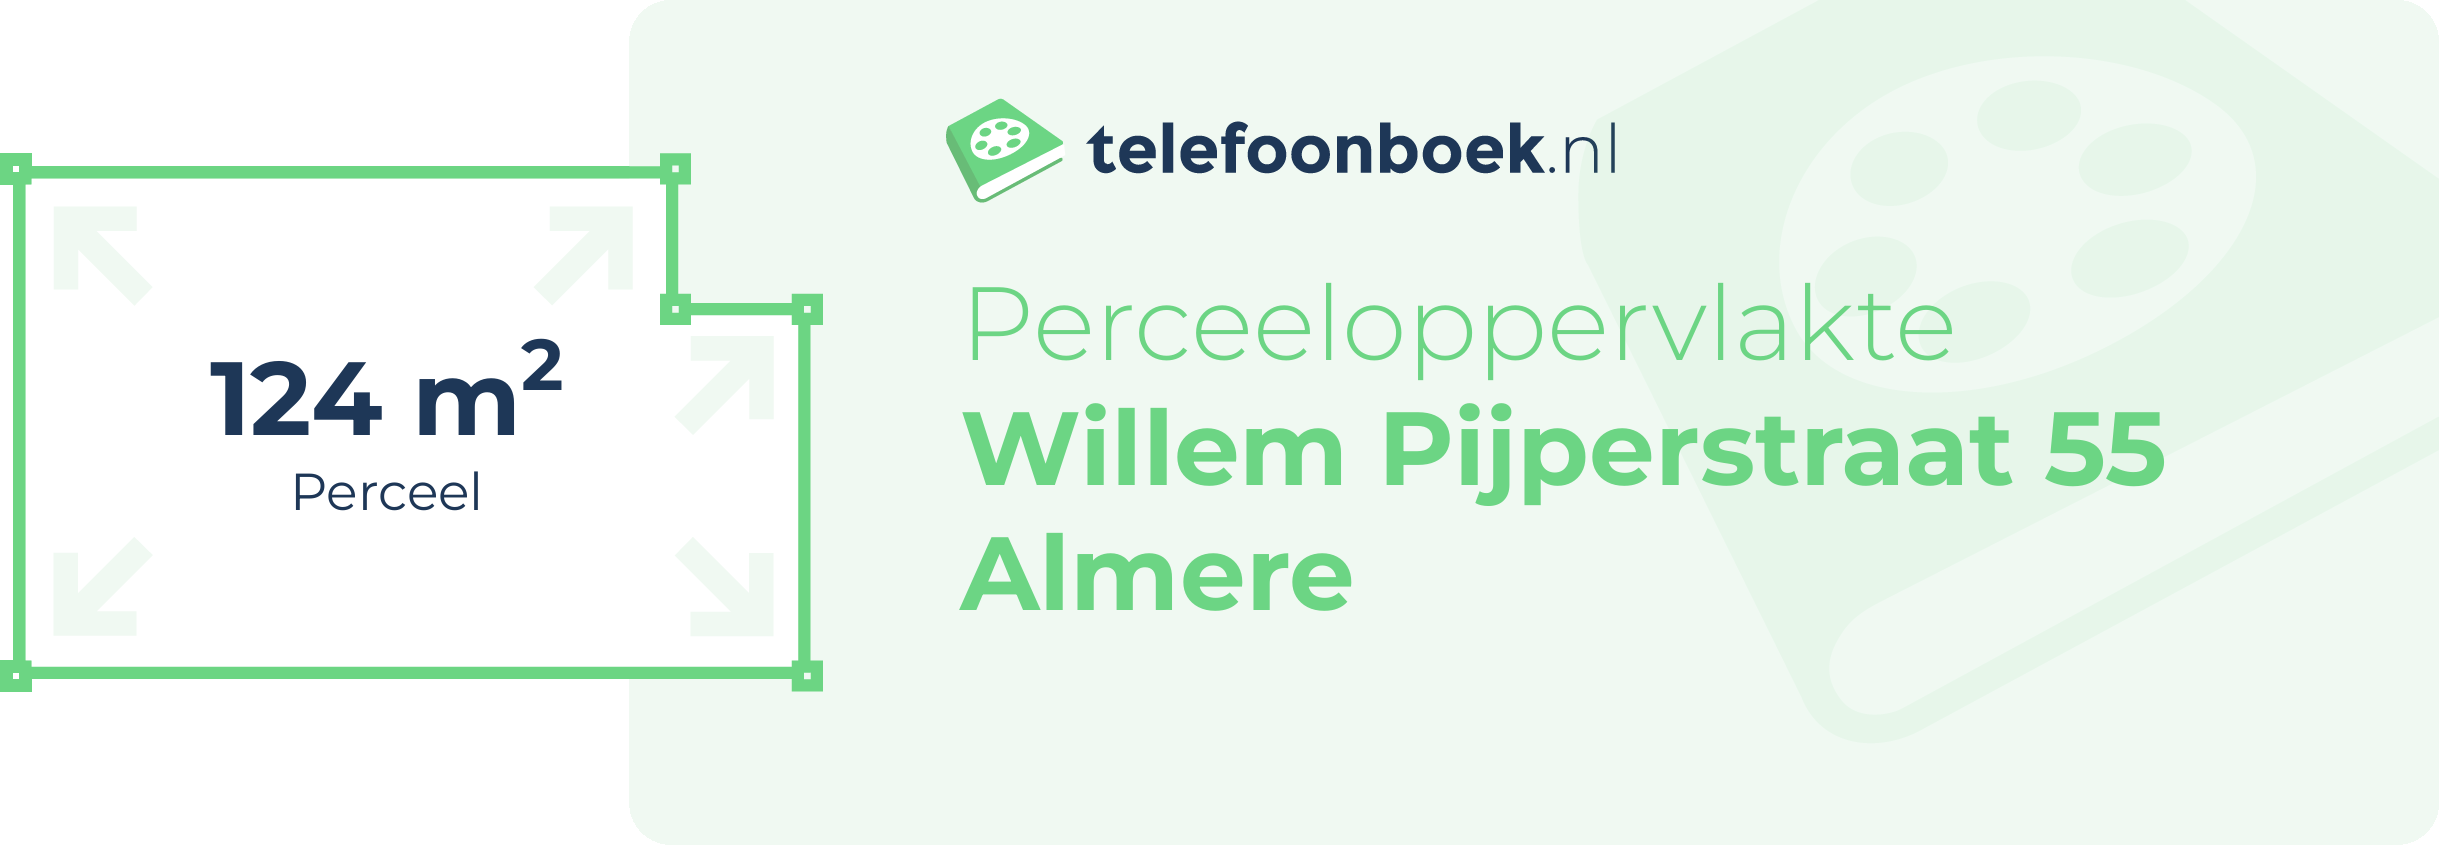 Perceeloppervlakte Willem Pijperstraat 55 Almere